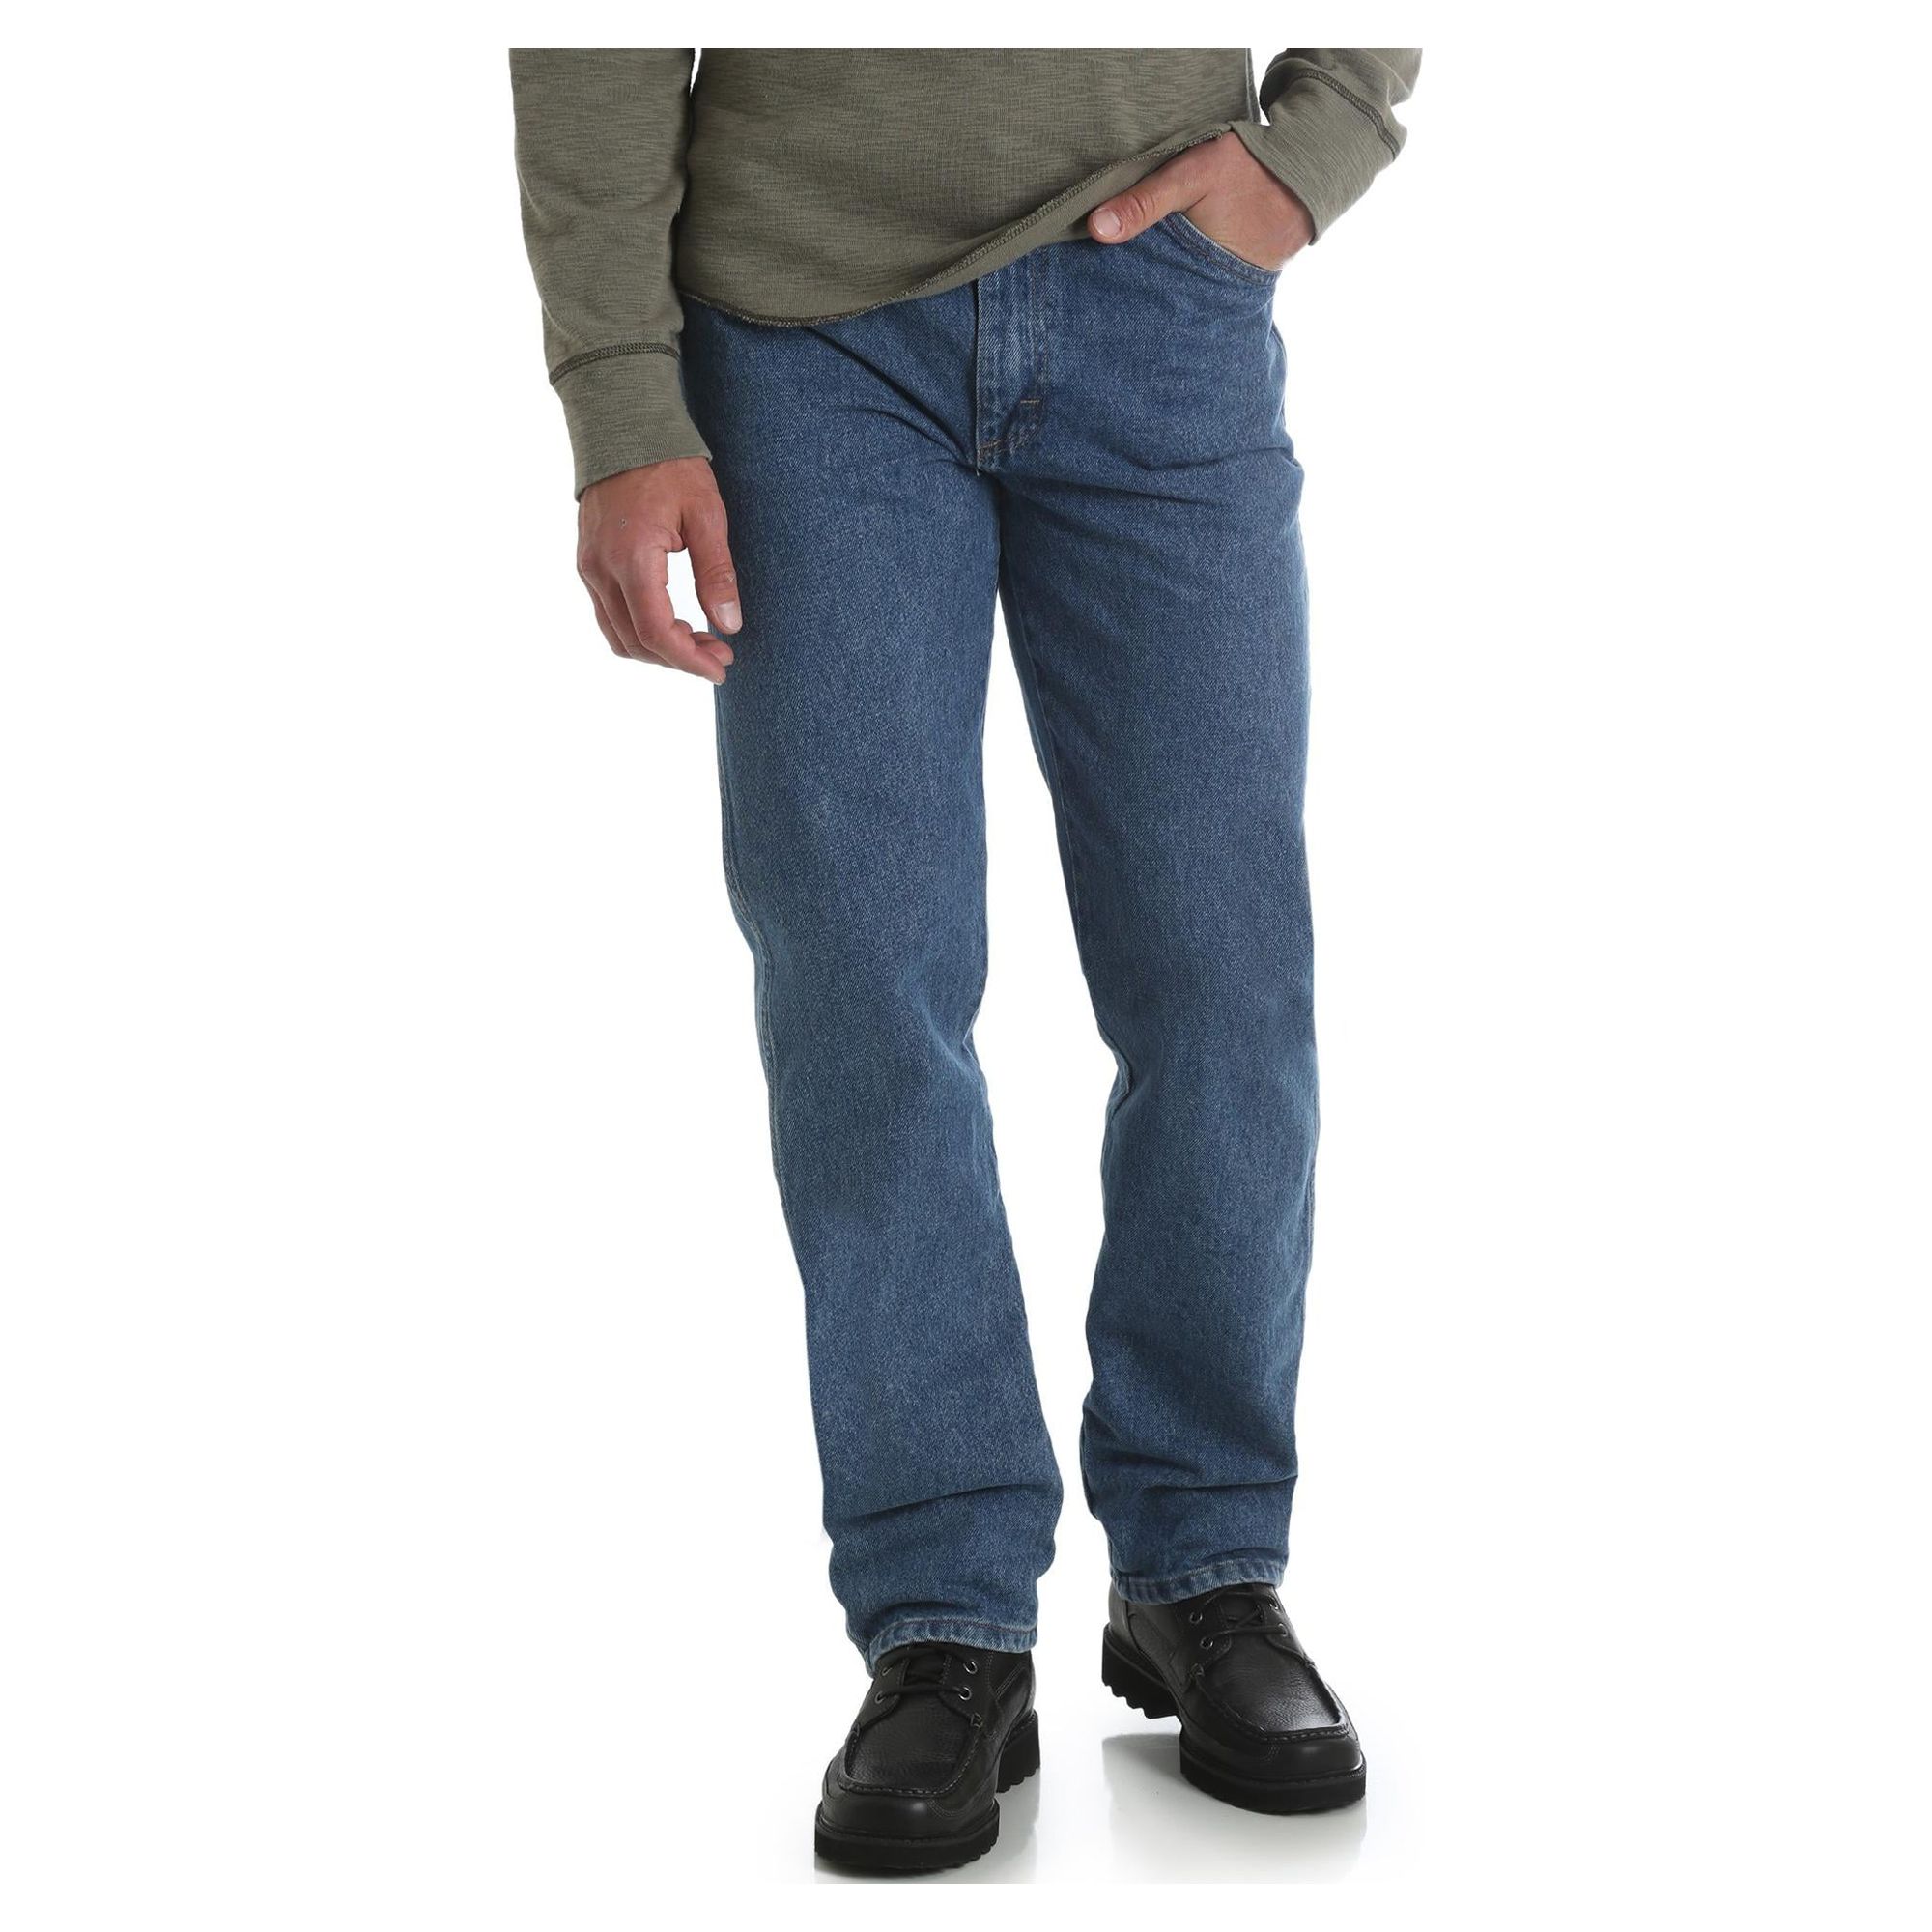 Wrangler Rustler Men's and Big Men's Regular Fit Jeans - image 1 of 4